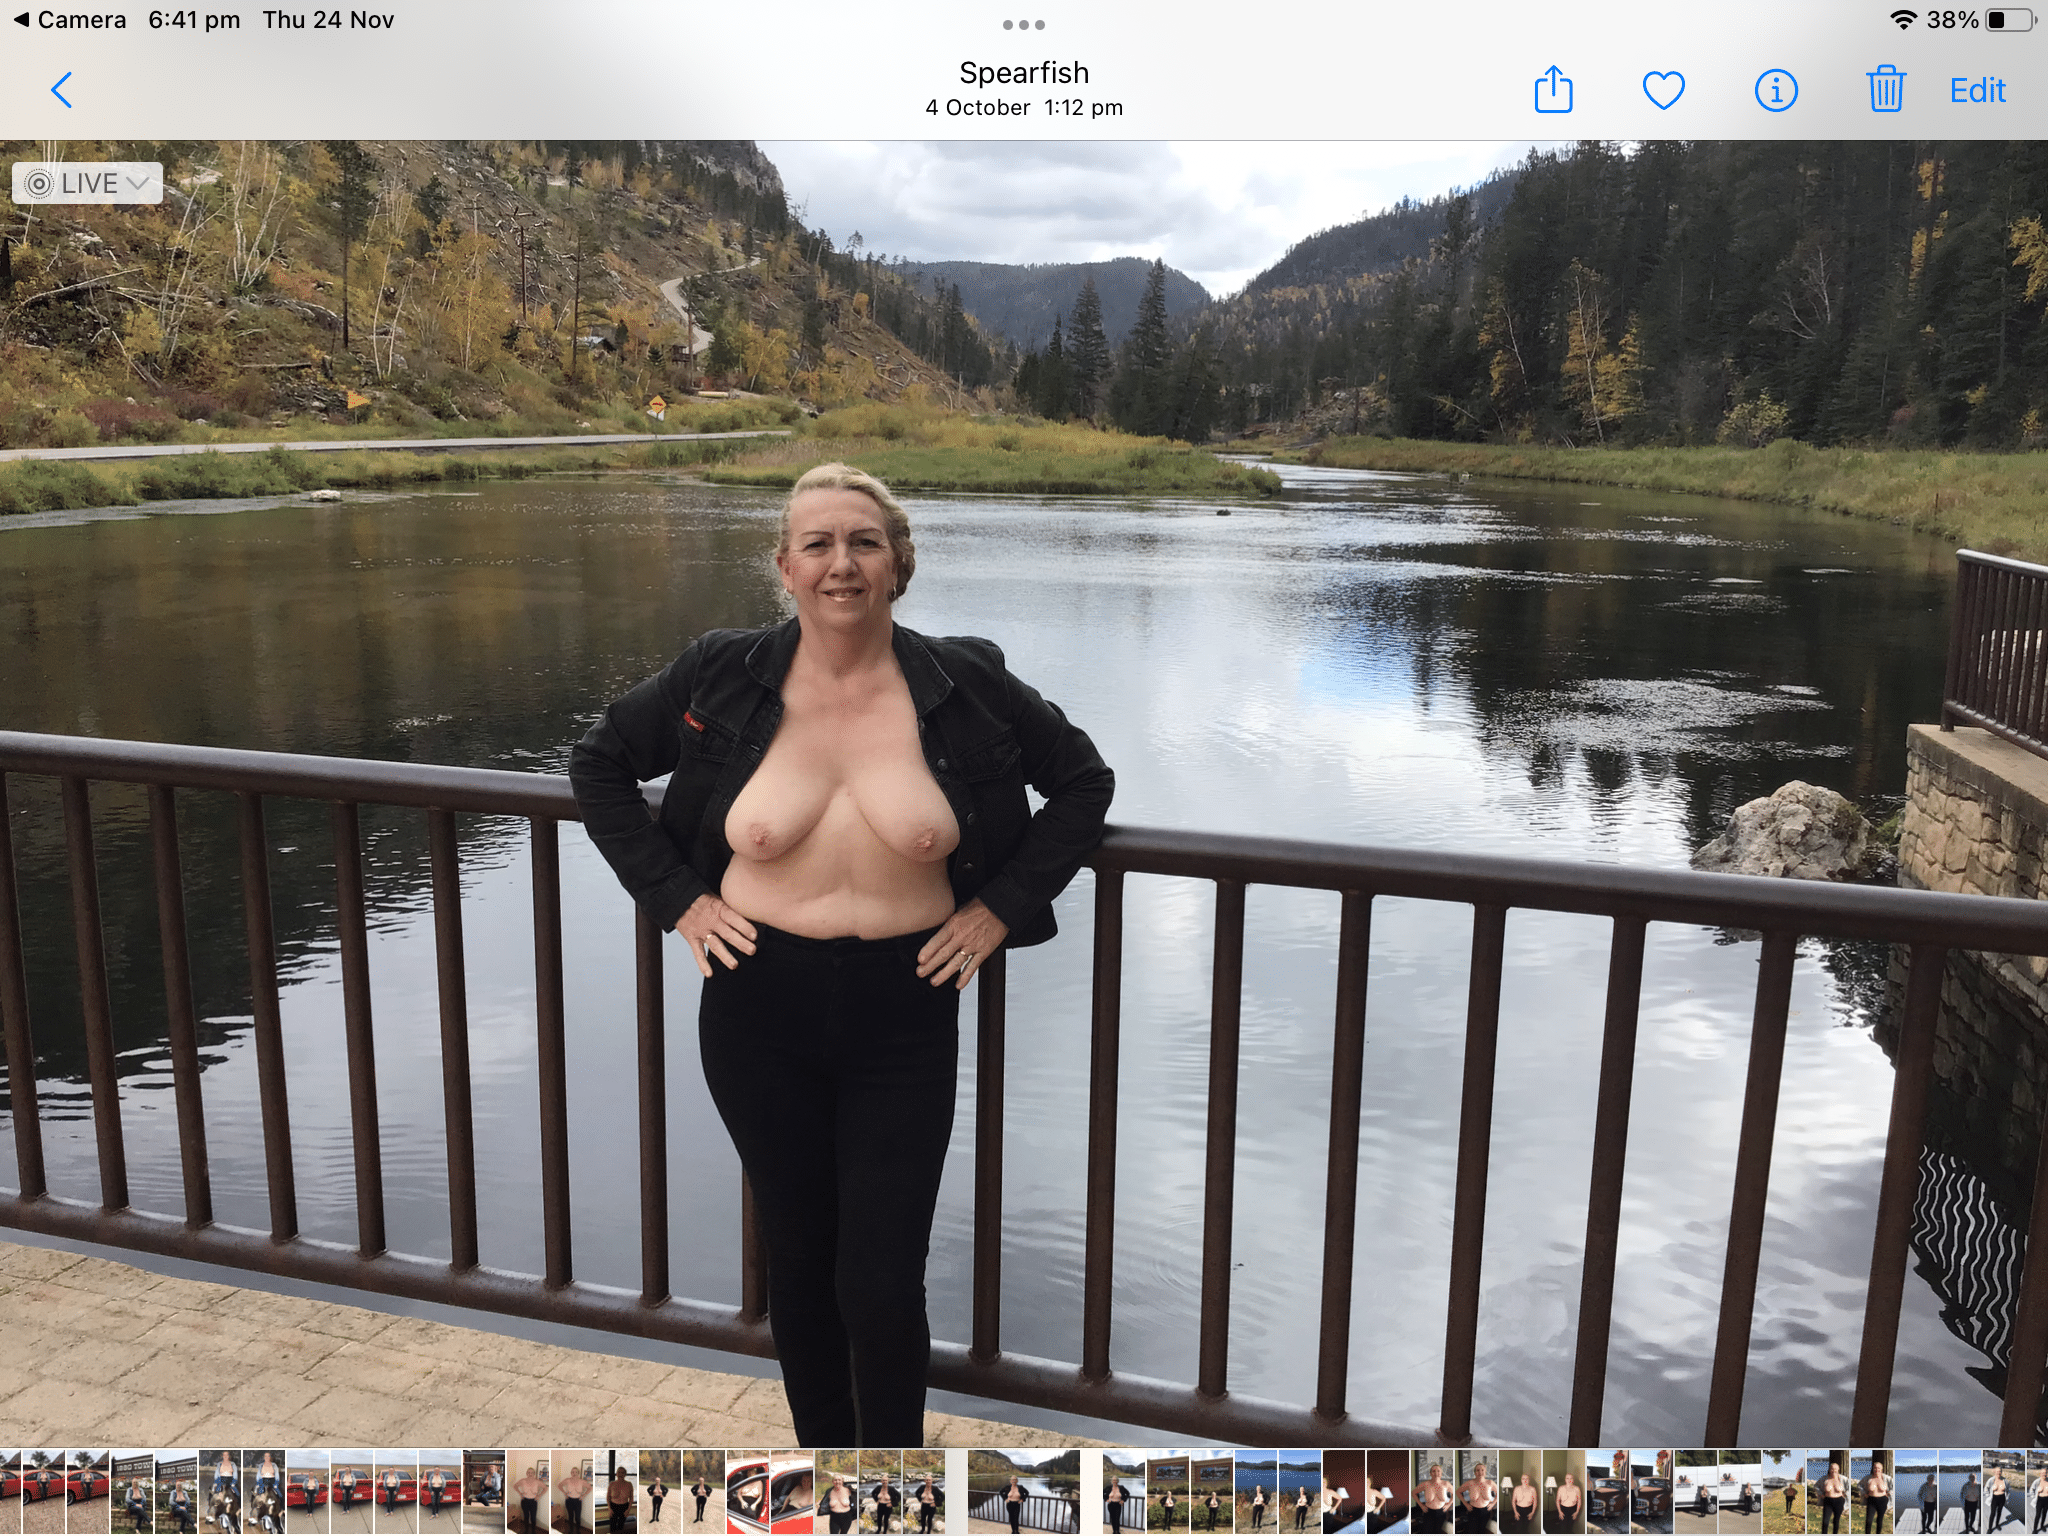 Real Amateurs Mature Flashing Pics Hotwife Pics Boobs Flash Pics - Getting my natural tits out at the lake